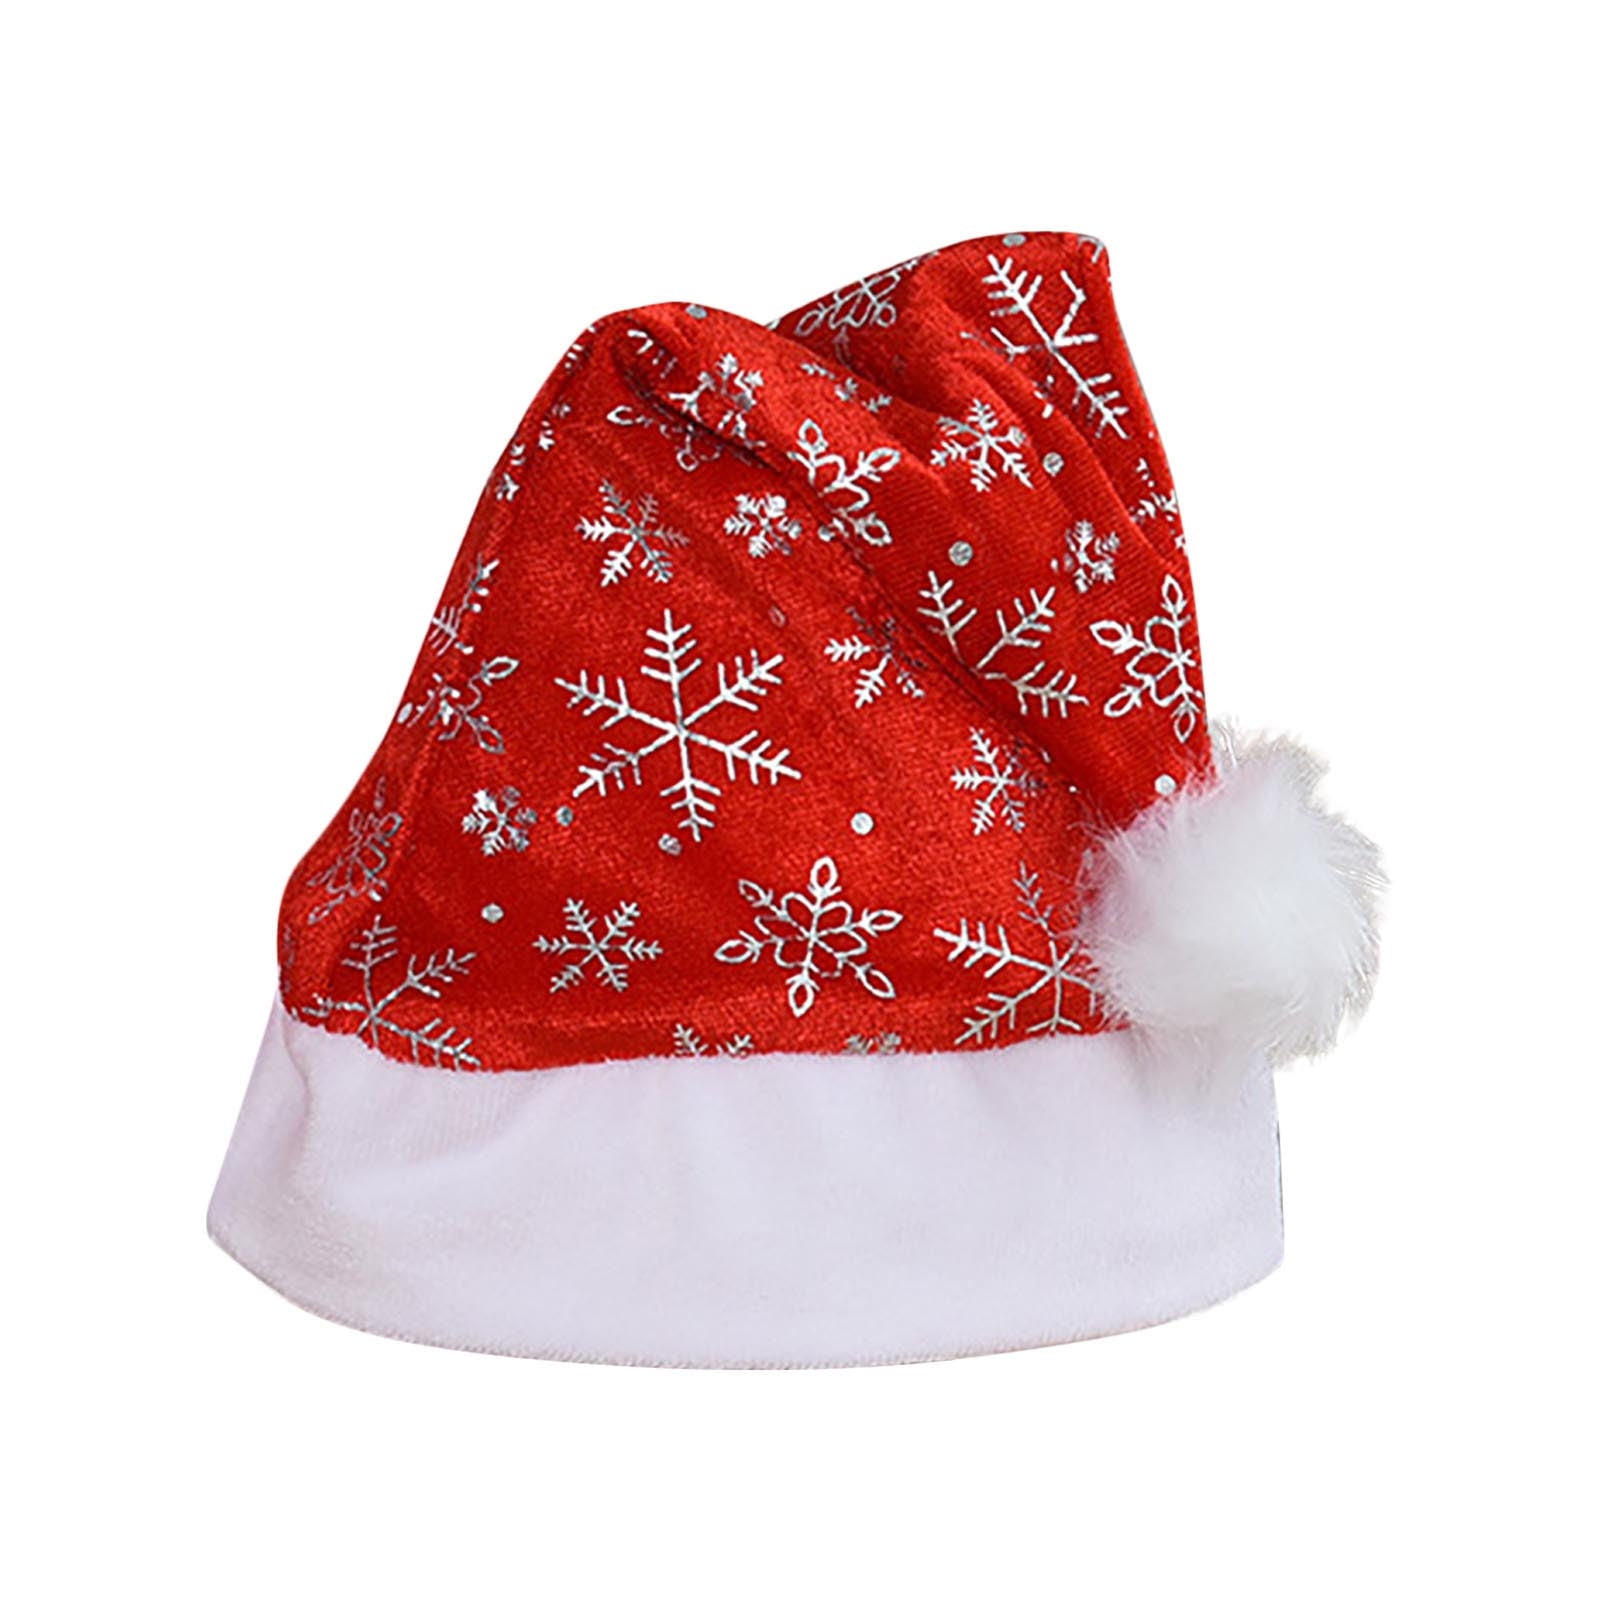 Christmas Santa Hats Home Xmas Warm Plush Cosplay Holiday Party Costume Cap Gift